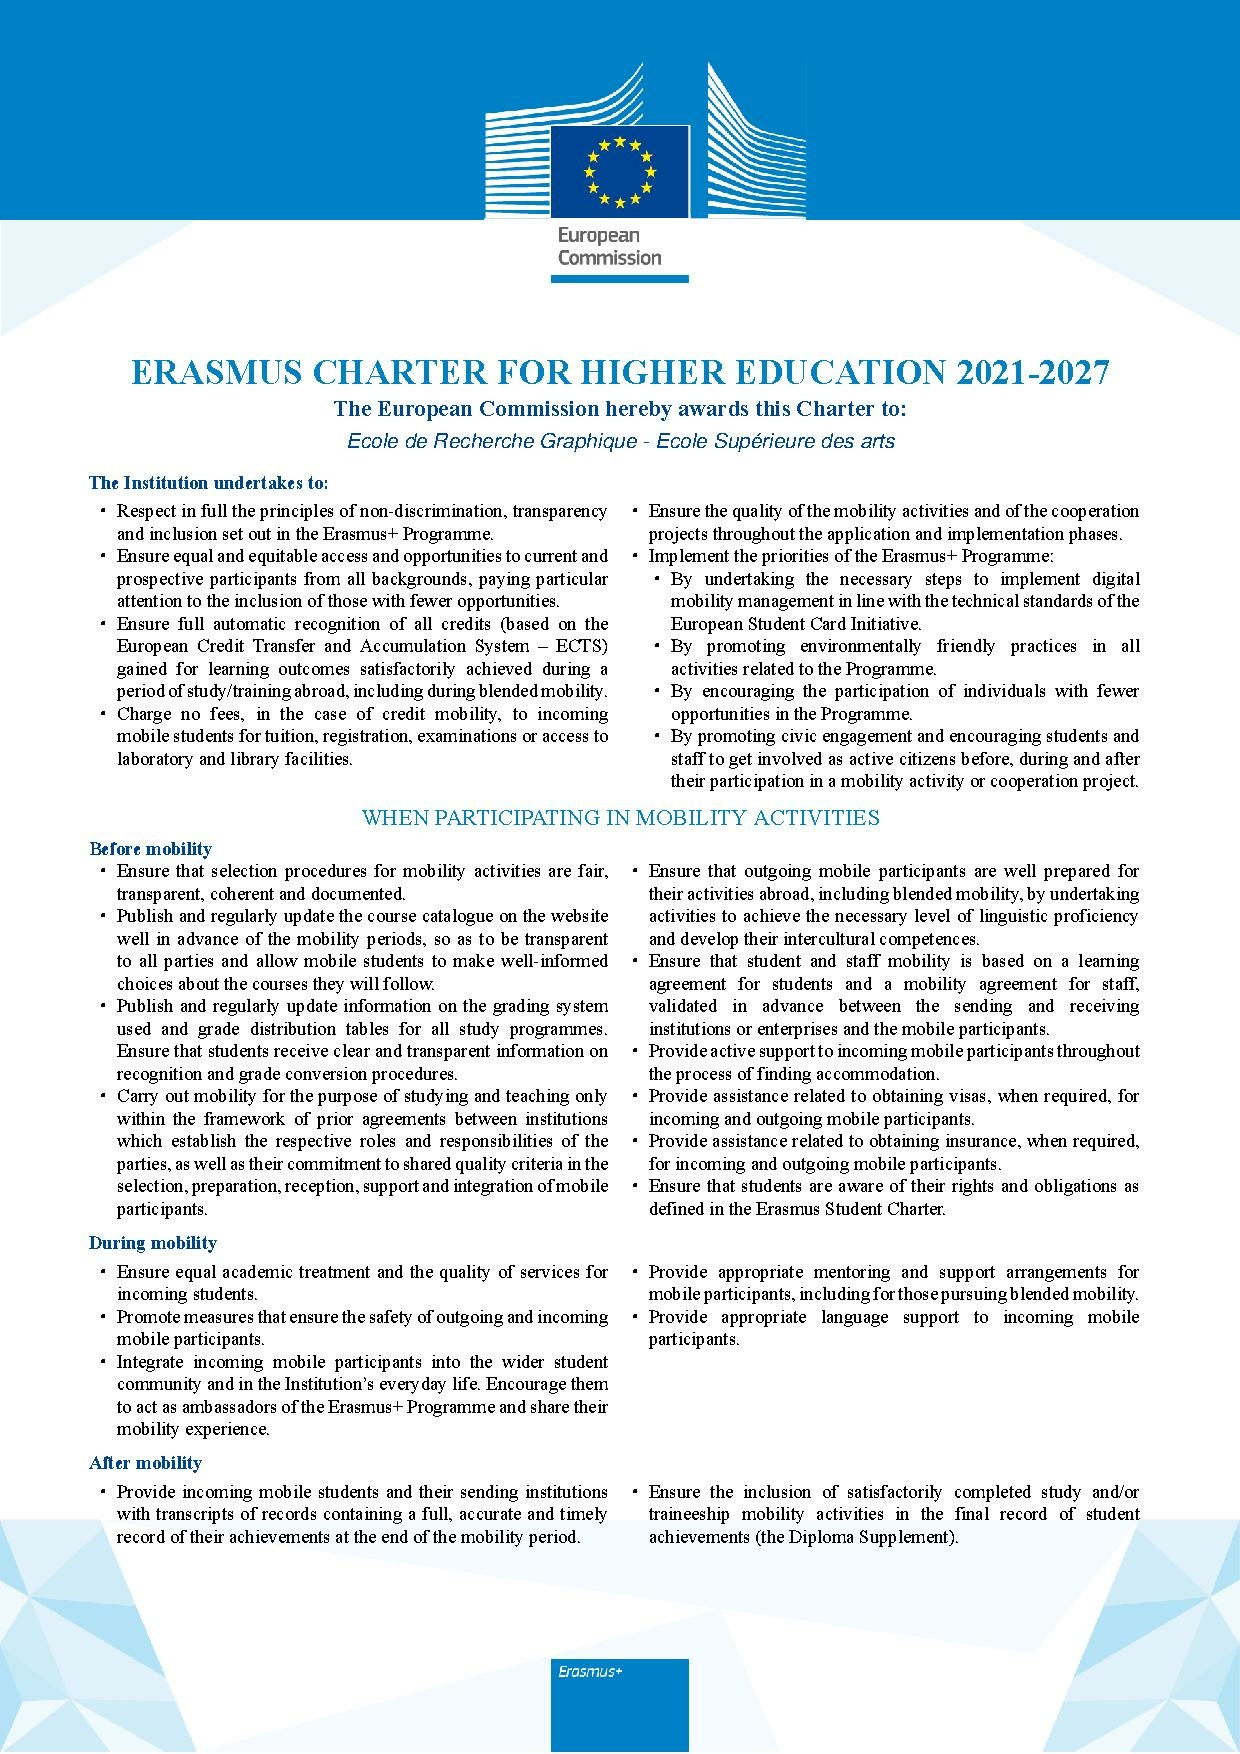 Erasmus Charter